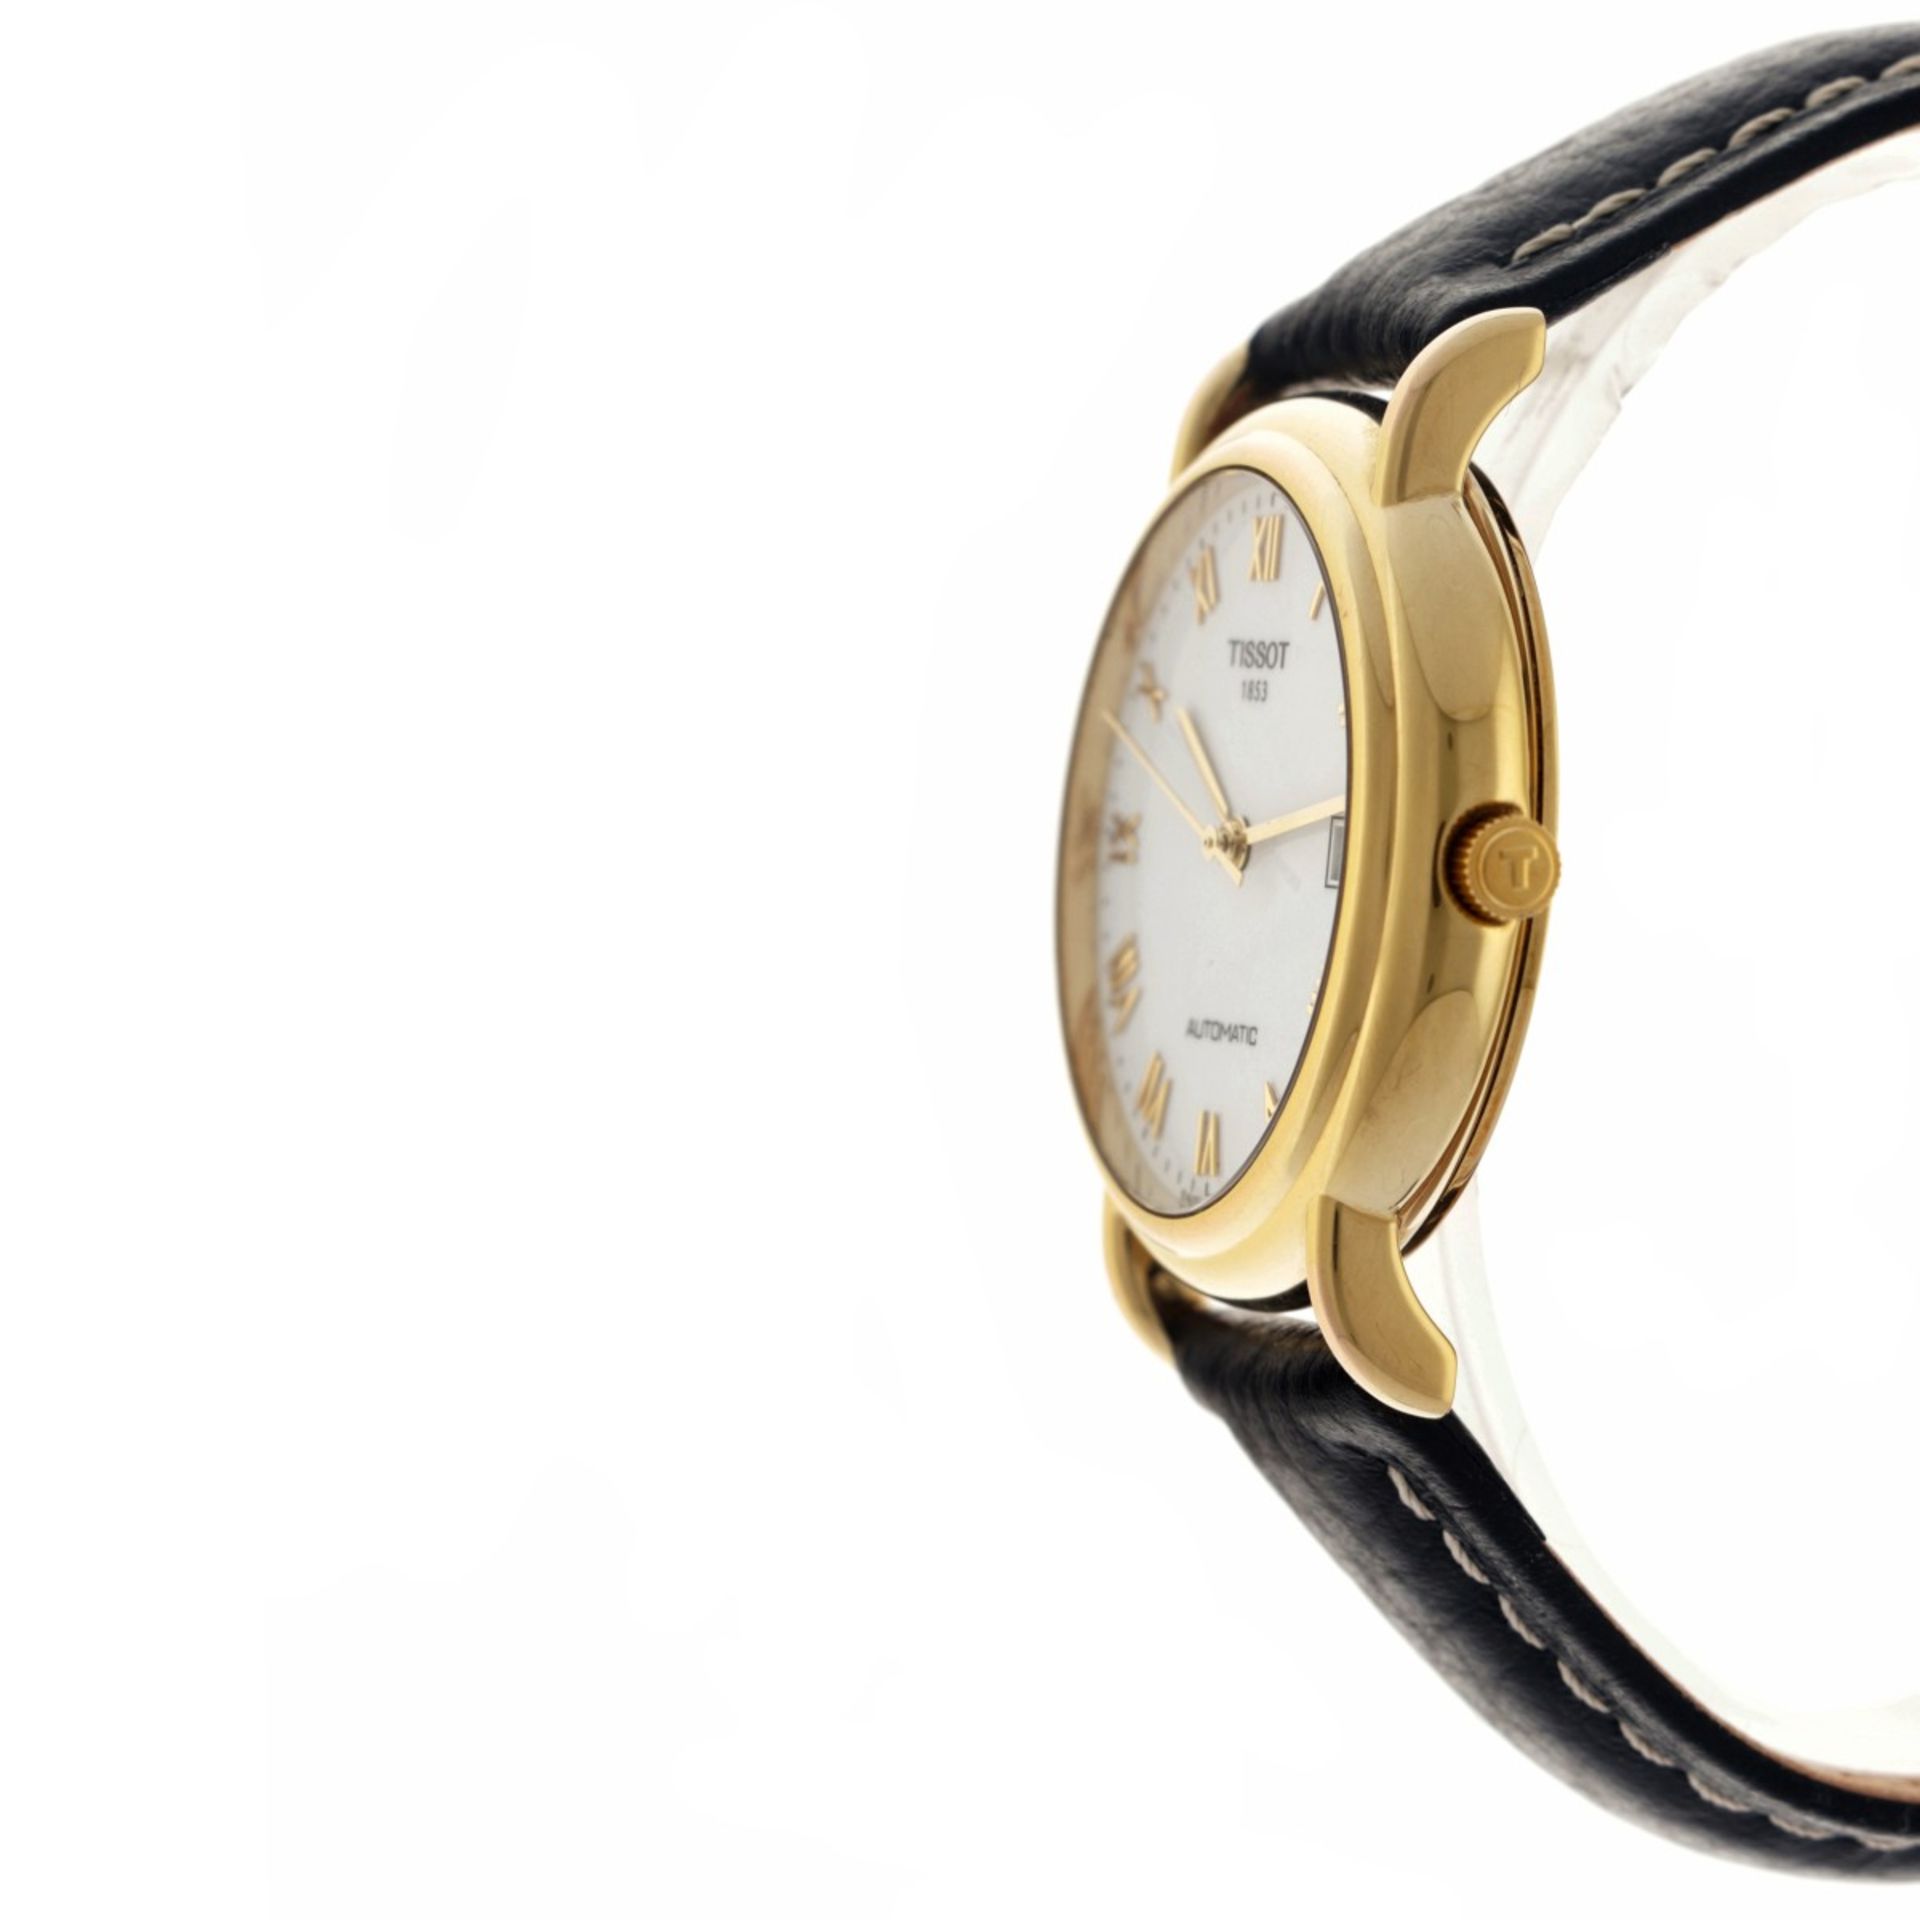 Tissot T-Gold T71.3.444.13 - Men's watch - 2011. - Image 4 of 6